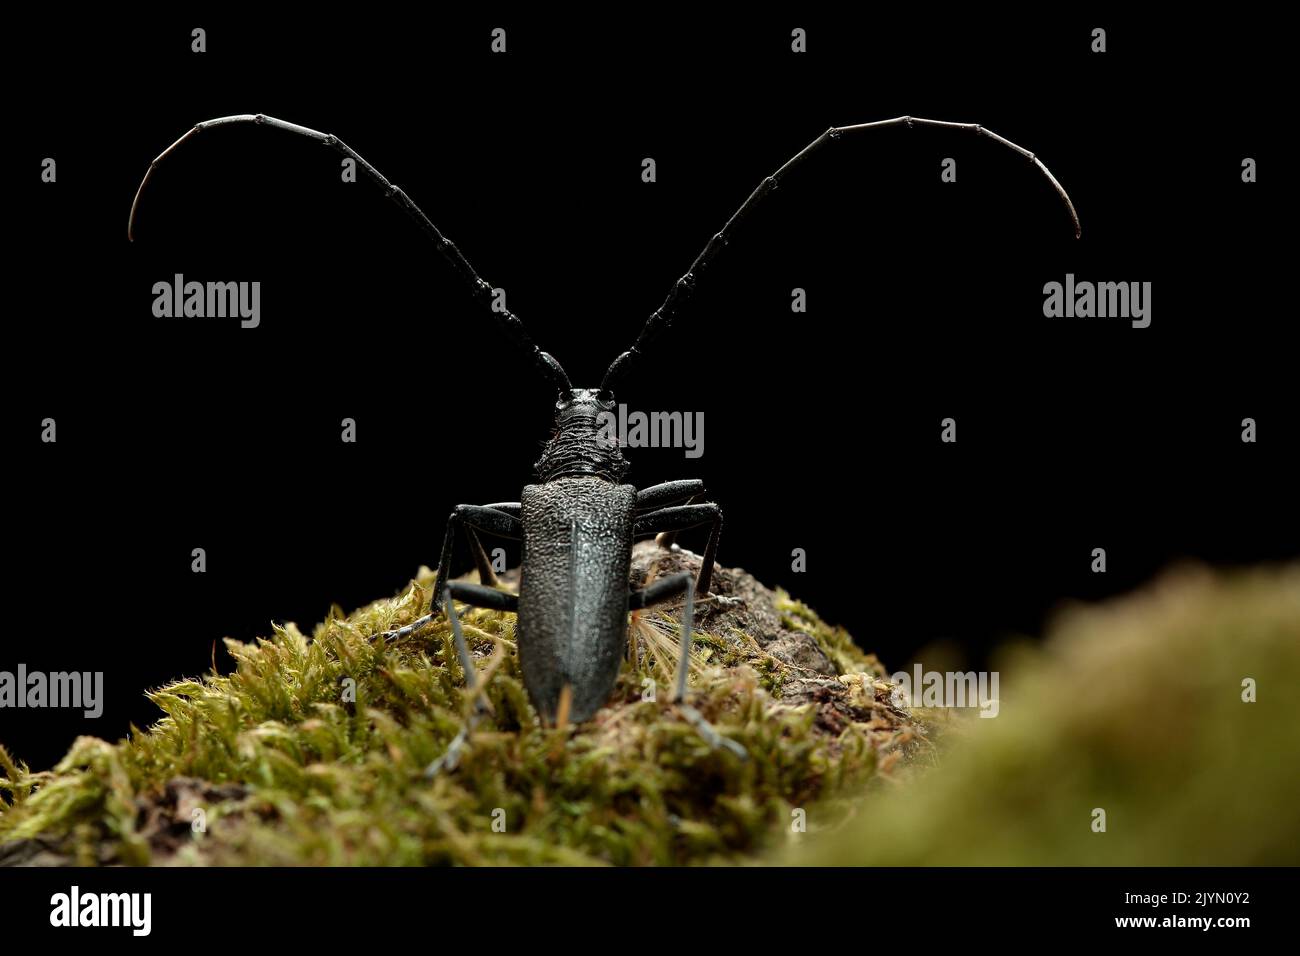 Capricorn beetle (Cerambyx scopolii) on black background Stock Photo